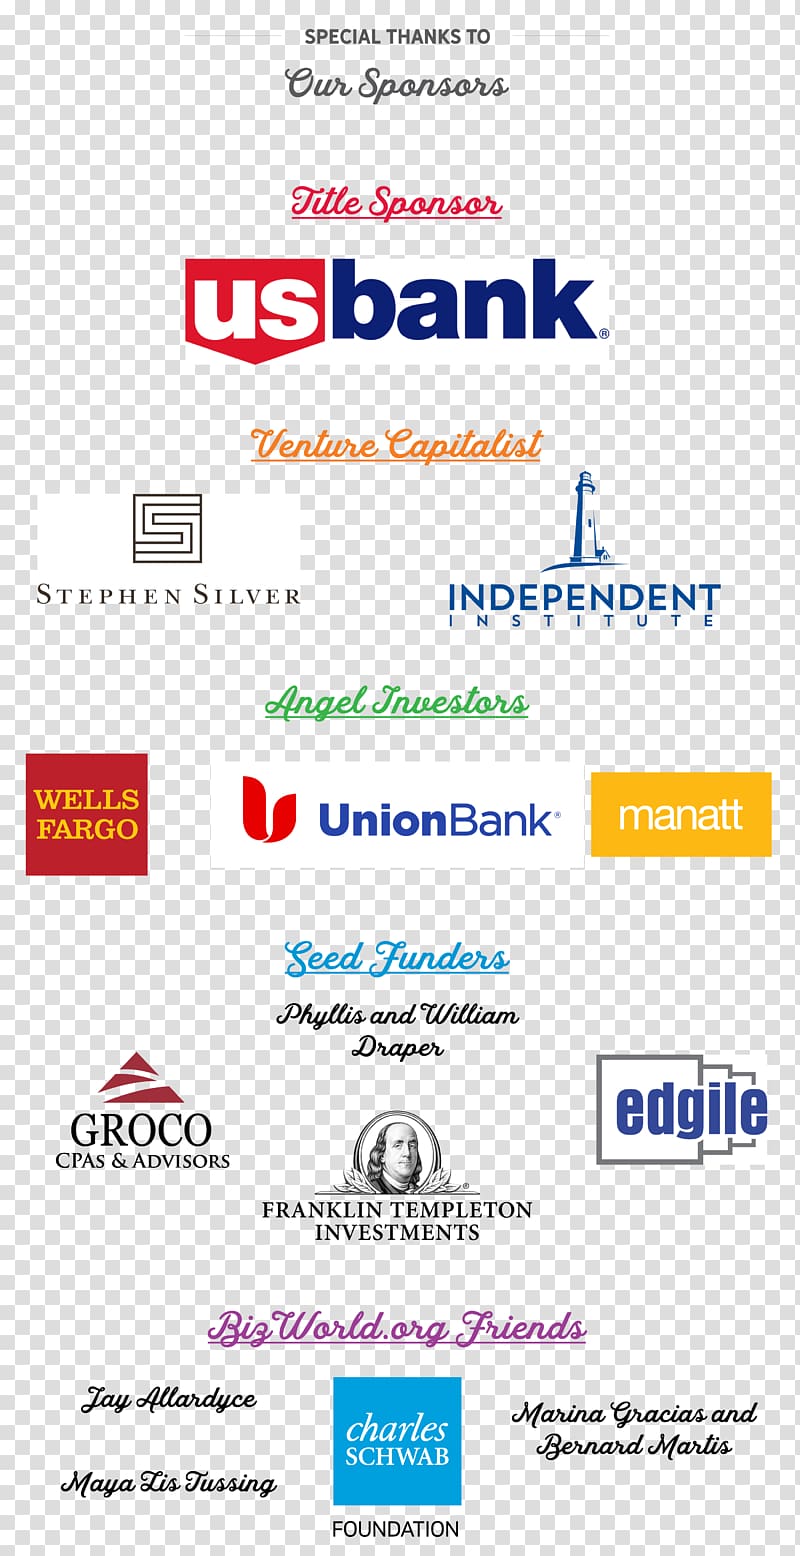 U.S. Bancorp Logo U.S. Bank Organization Web page, Sponsors transparent background PNG clipart